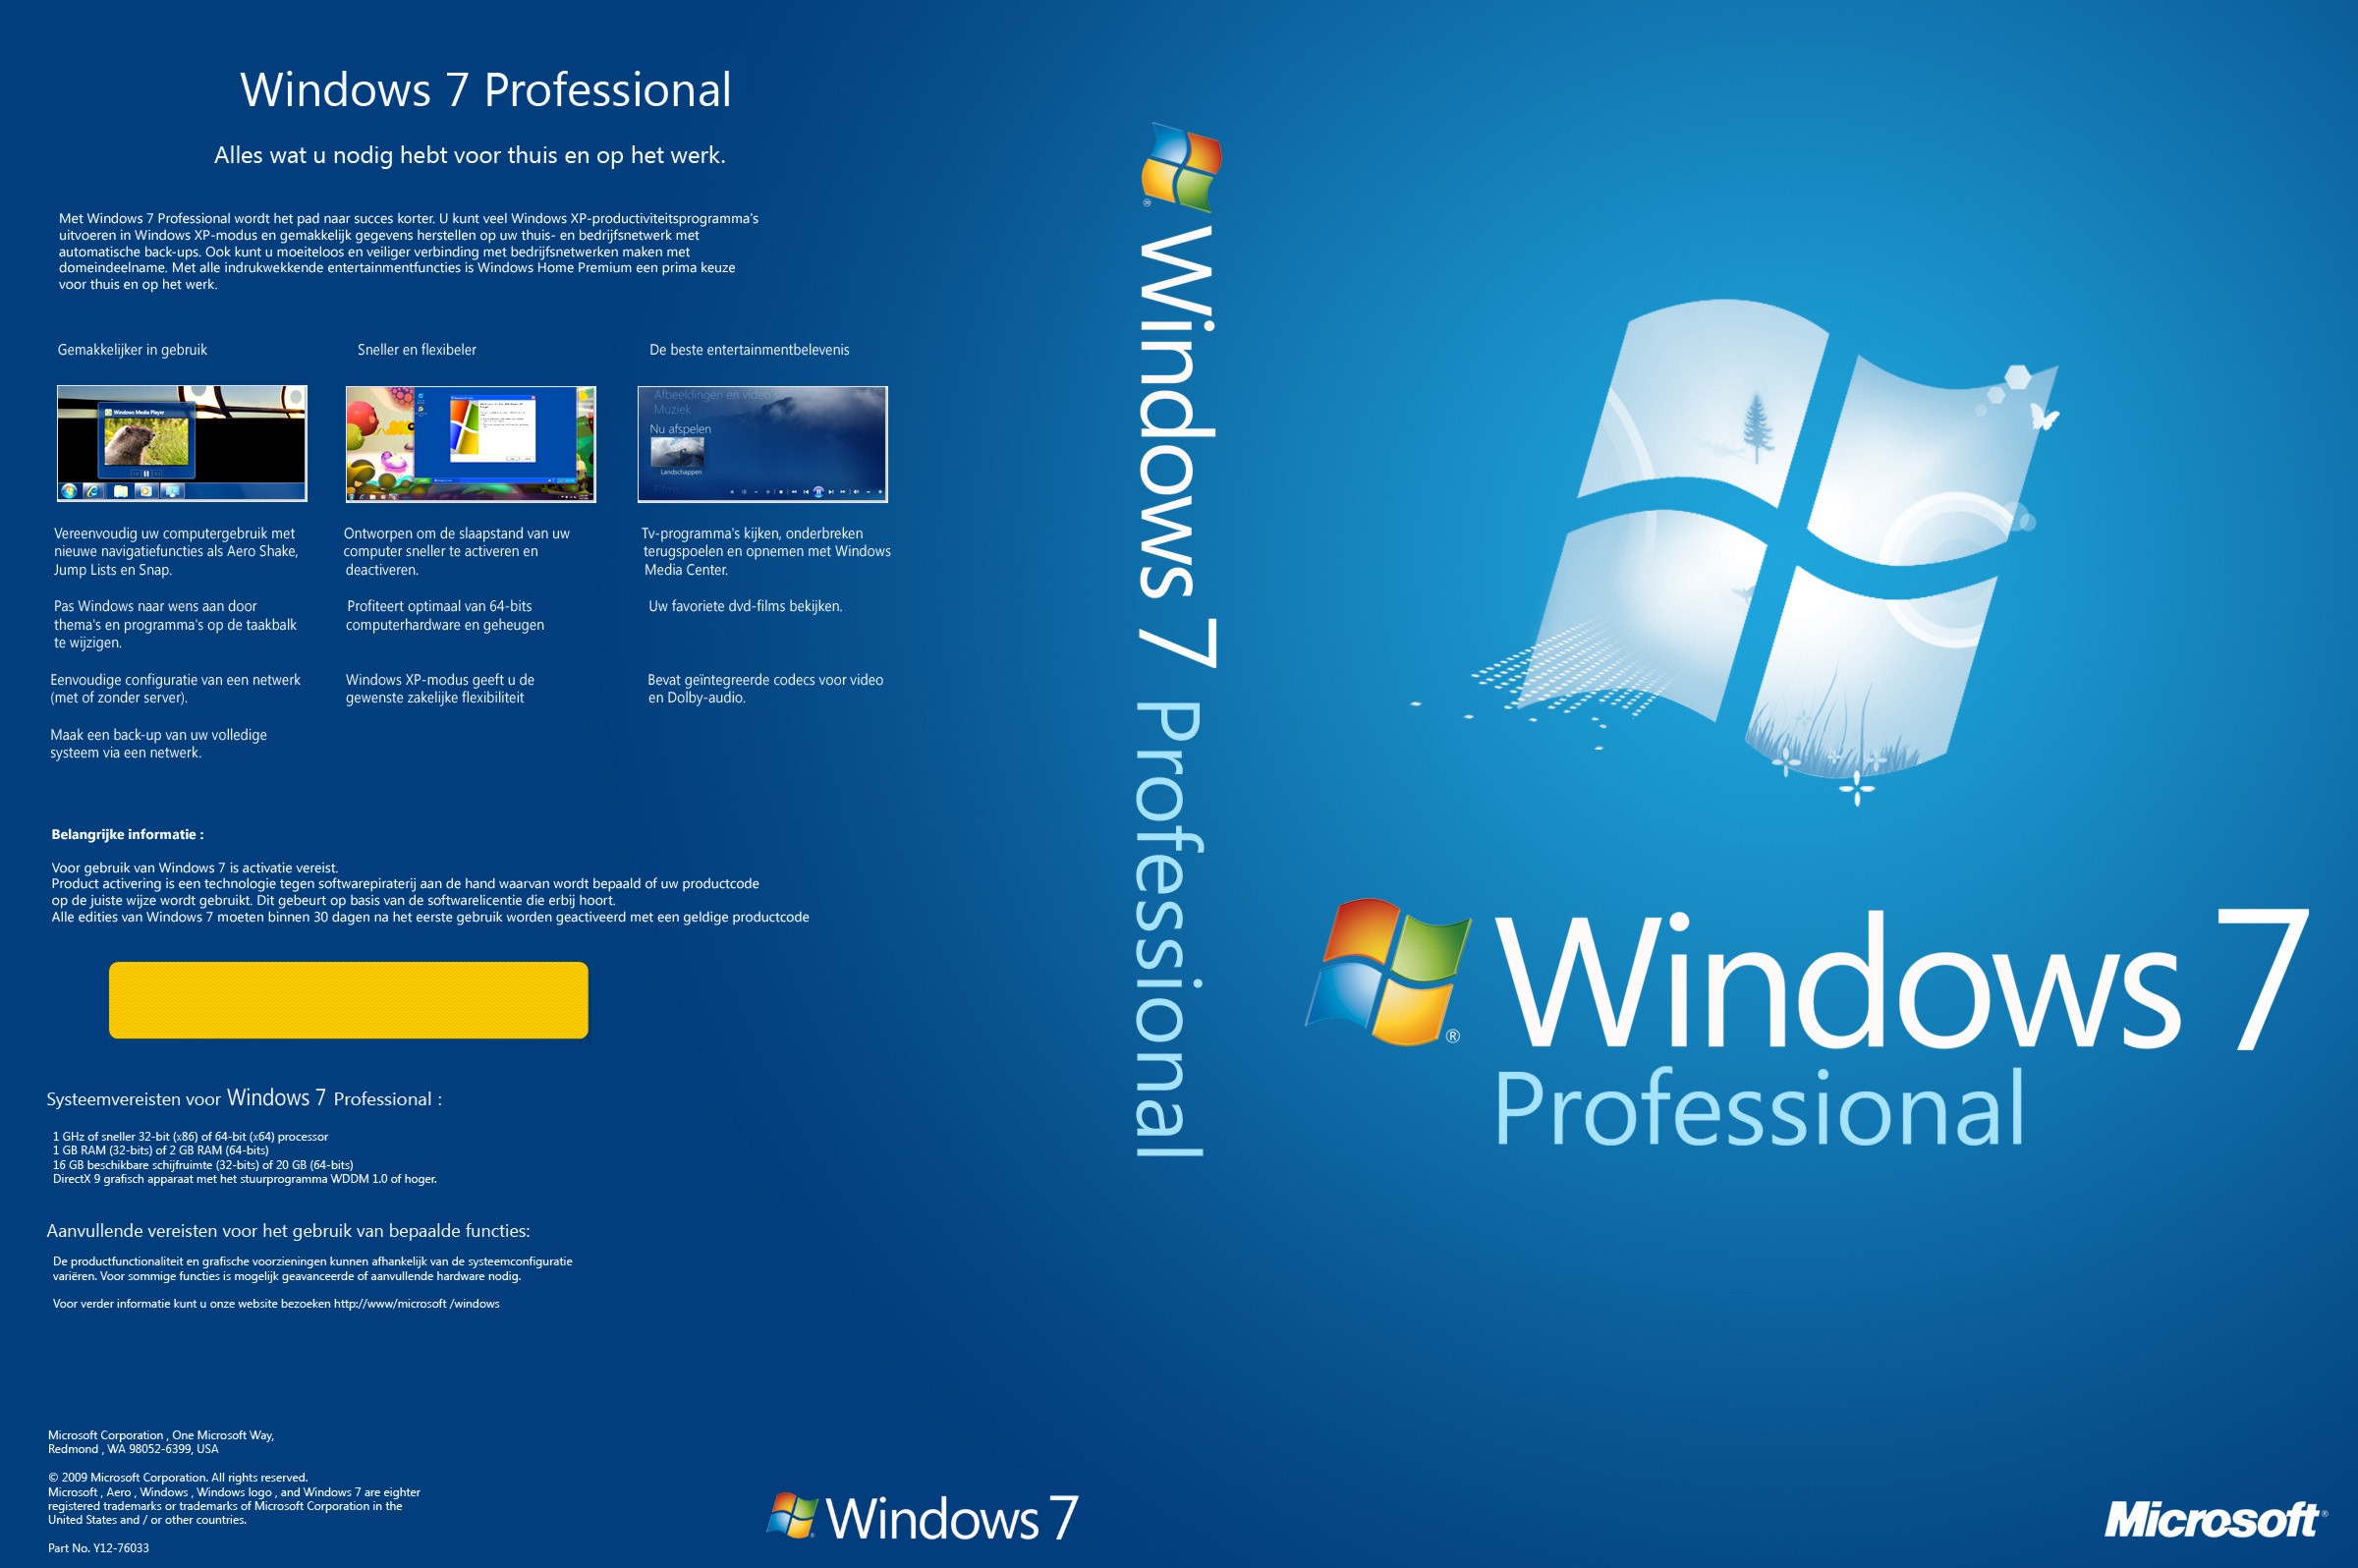 Windows Xp Professional Ключи